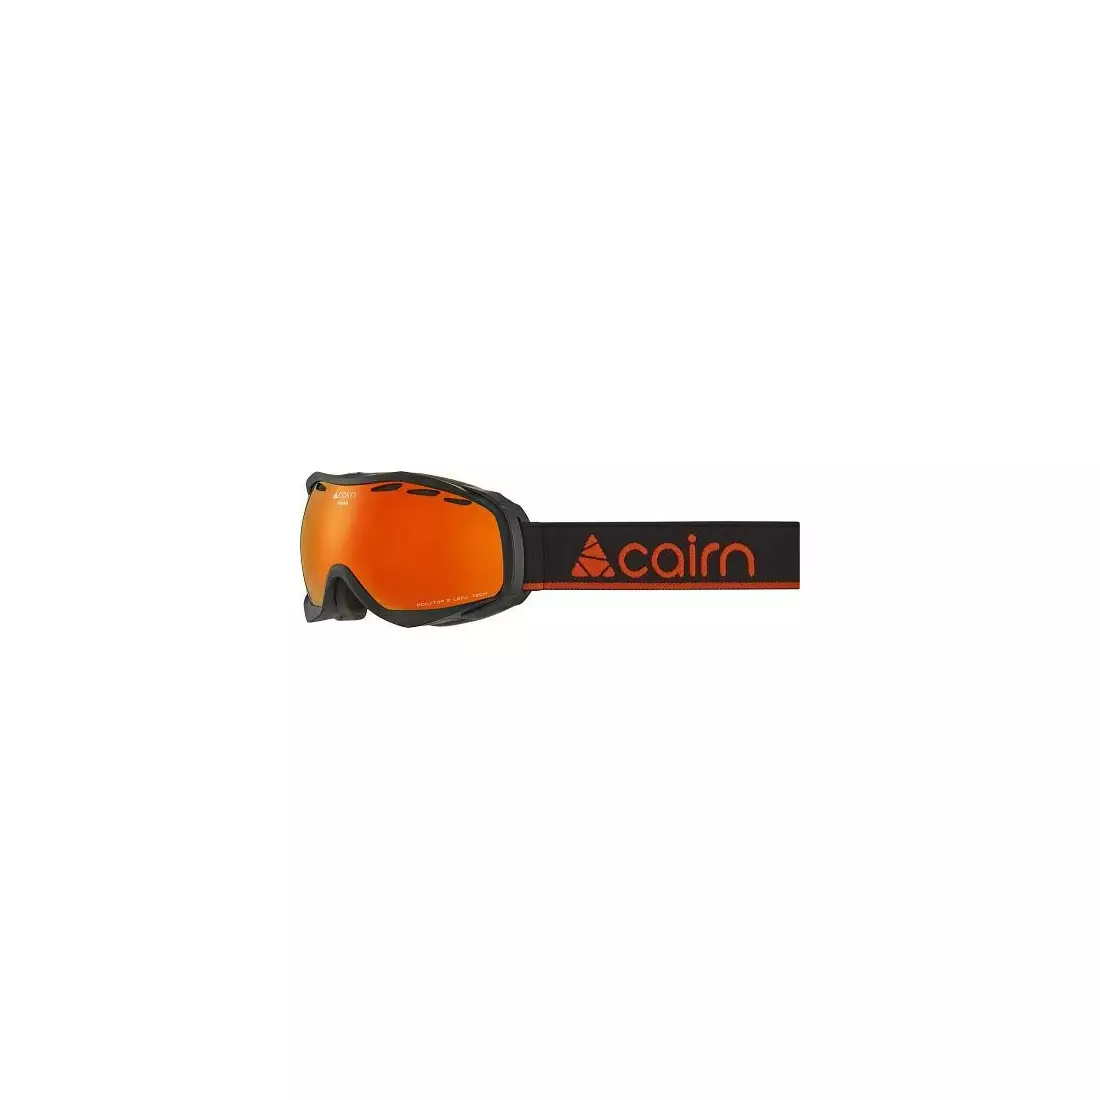 CAIRN gogle narciarskie/snowboardowe ALPHA SPX3000 IUM Mat Black Orange Mirror 